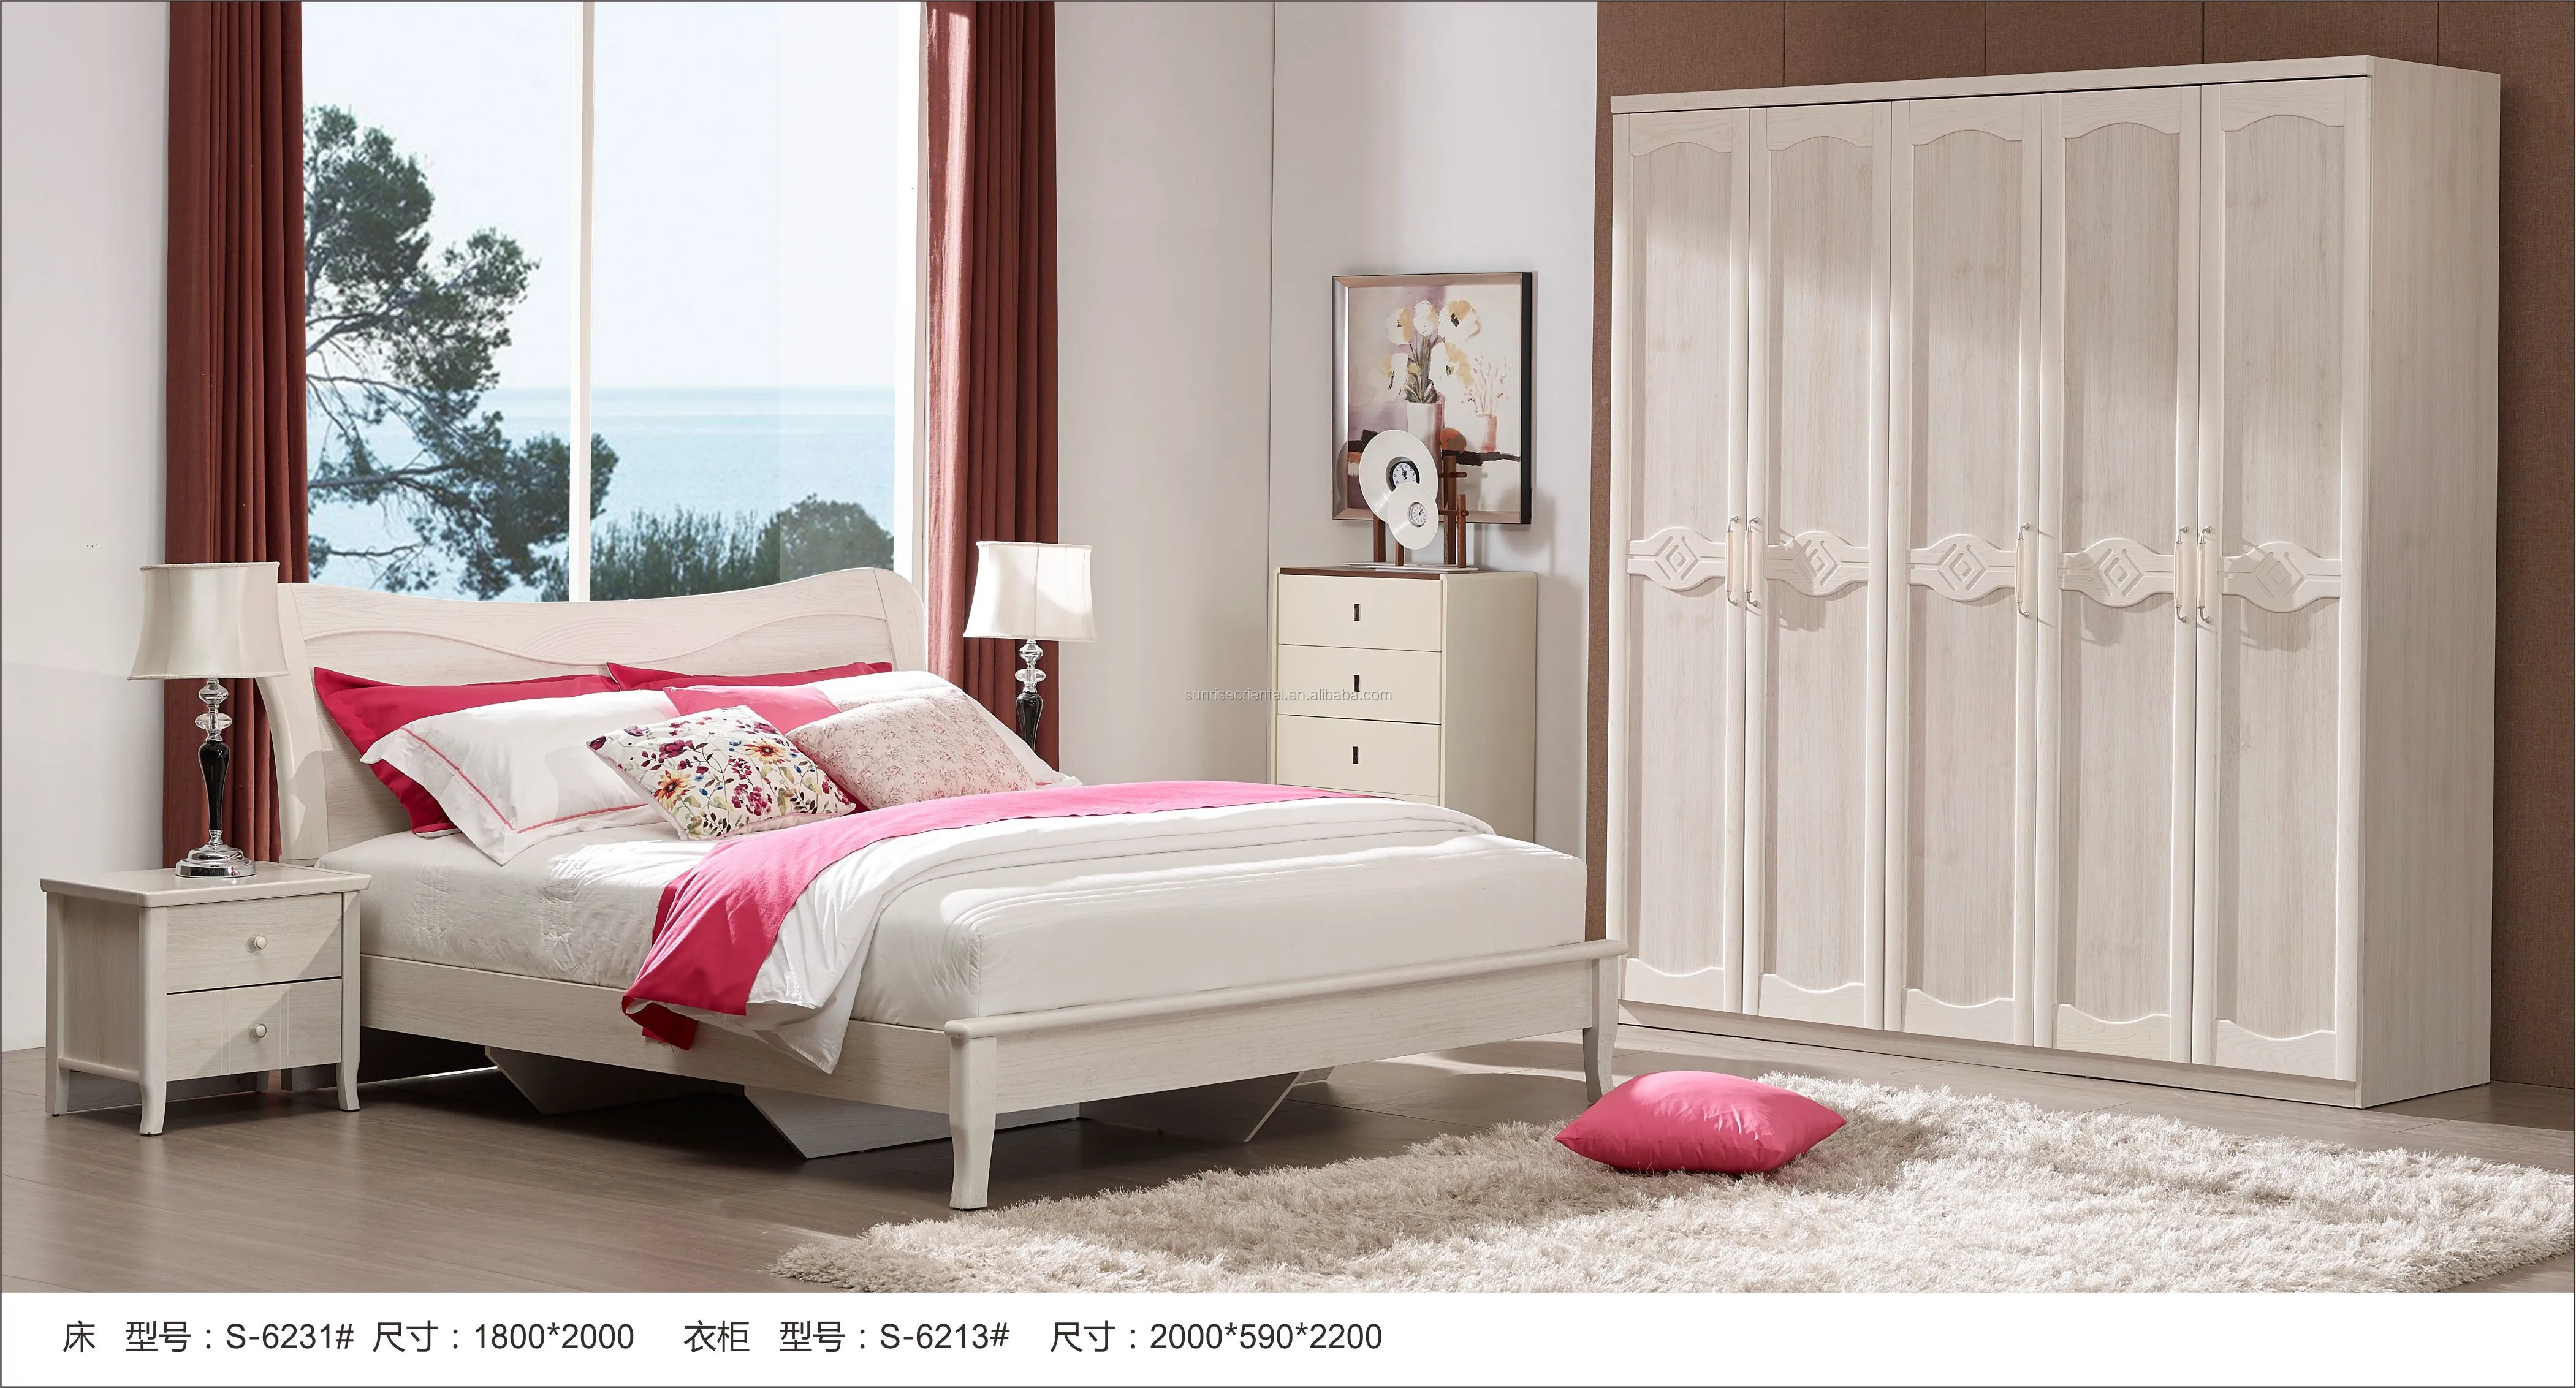 online shopping for bedroom furniture